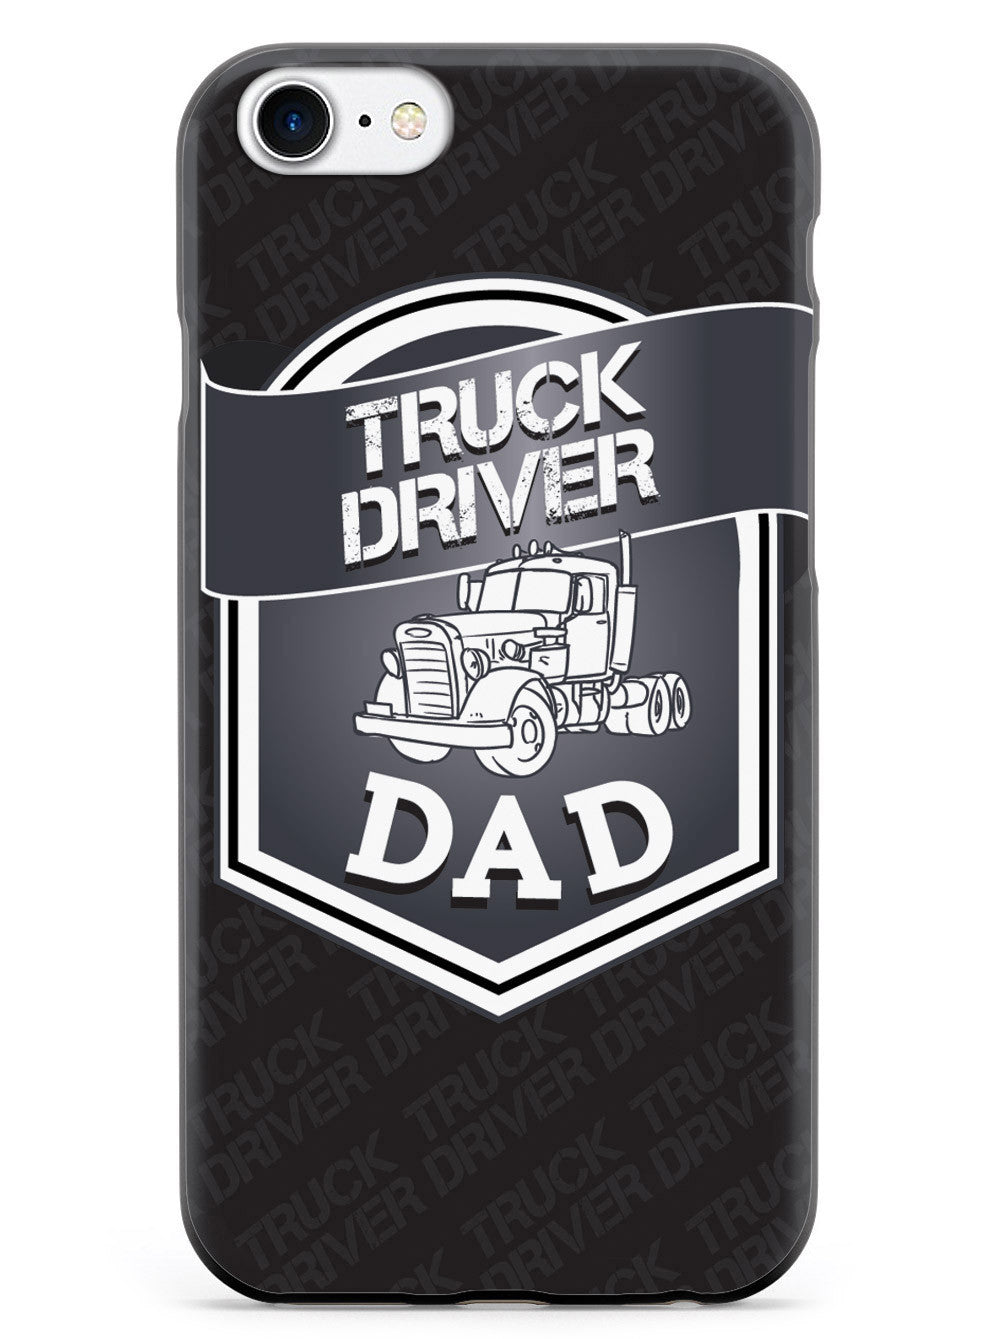 Truck Driver Dad Case